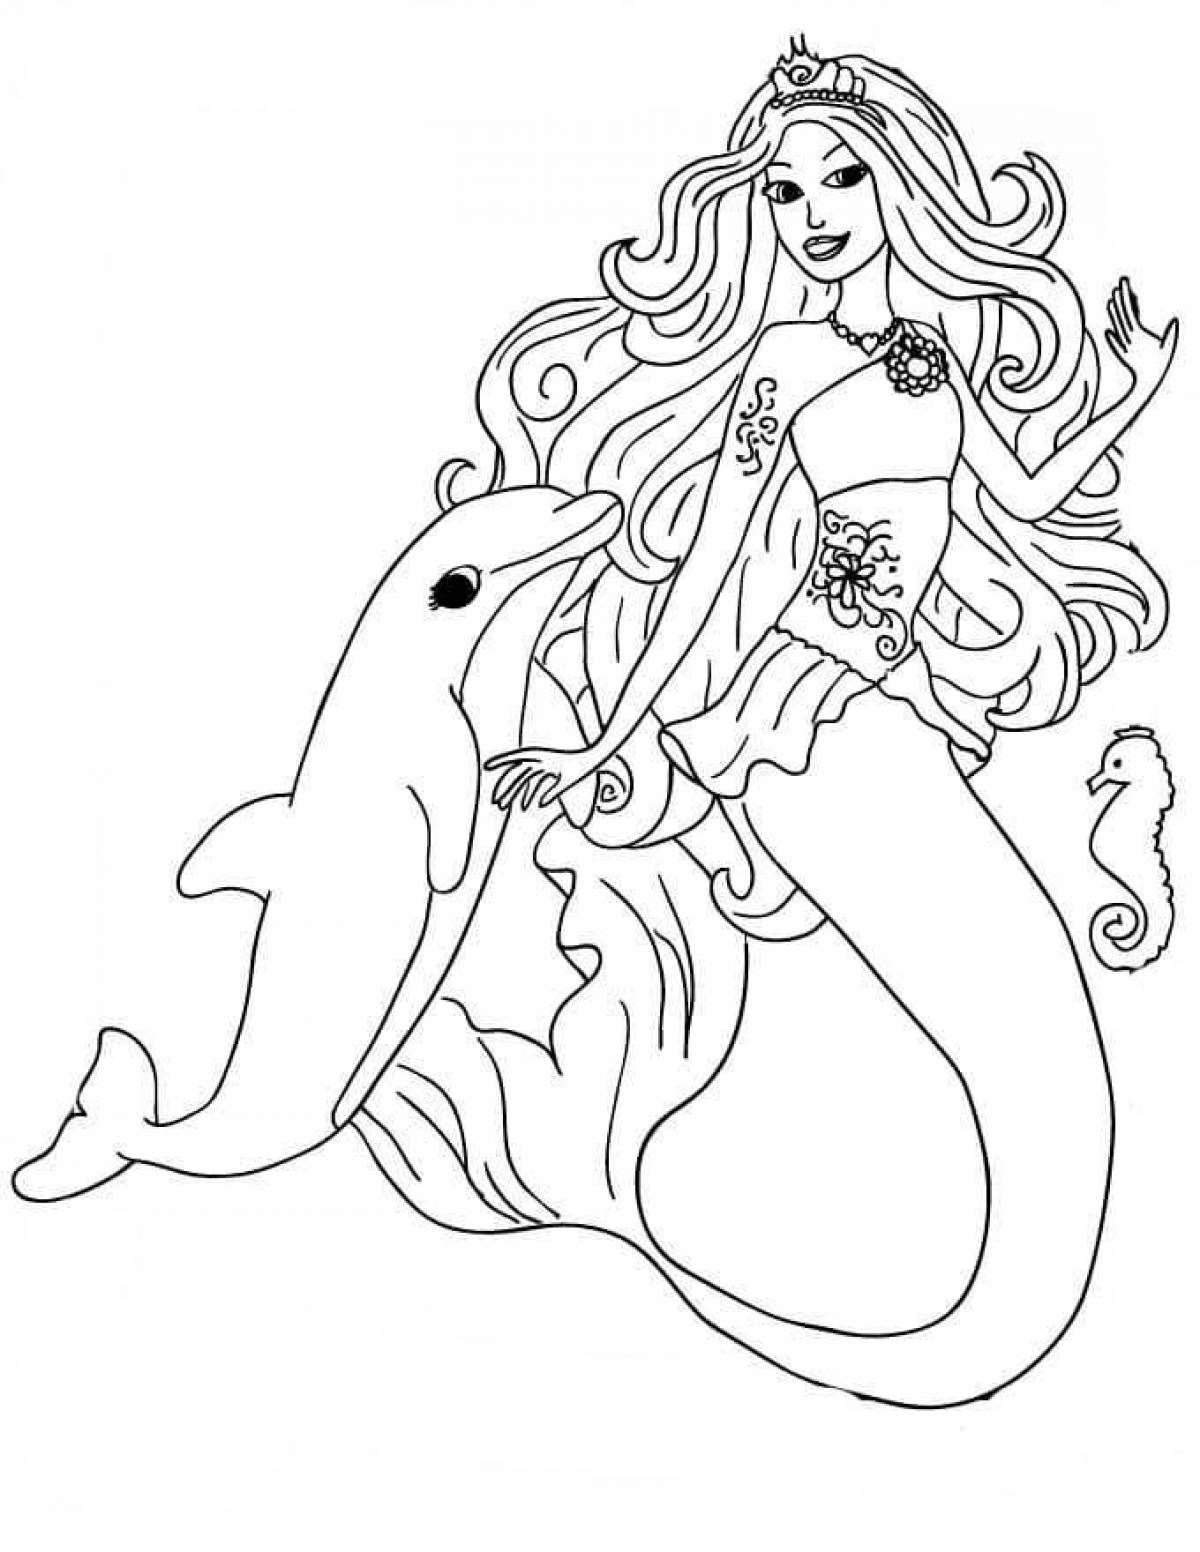 Brilliant barbie mermaid coloring page